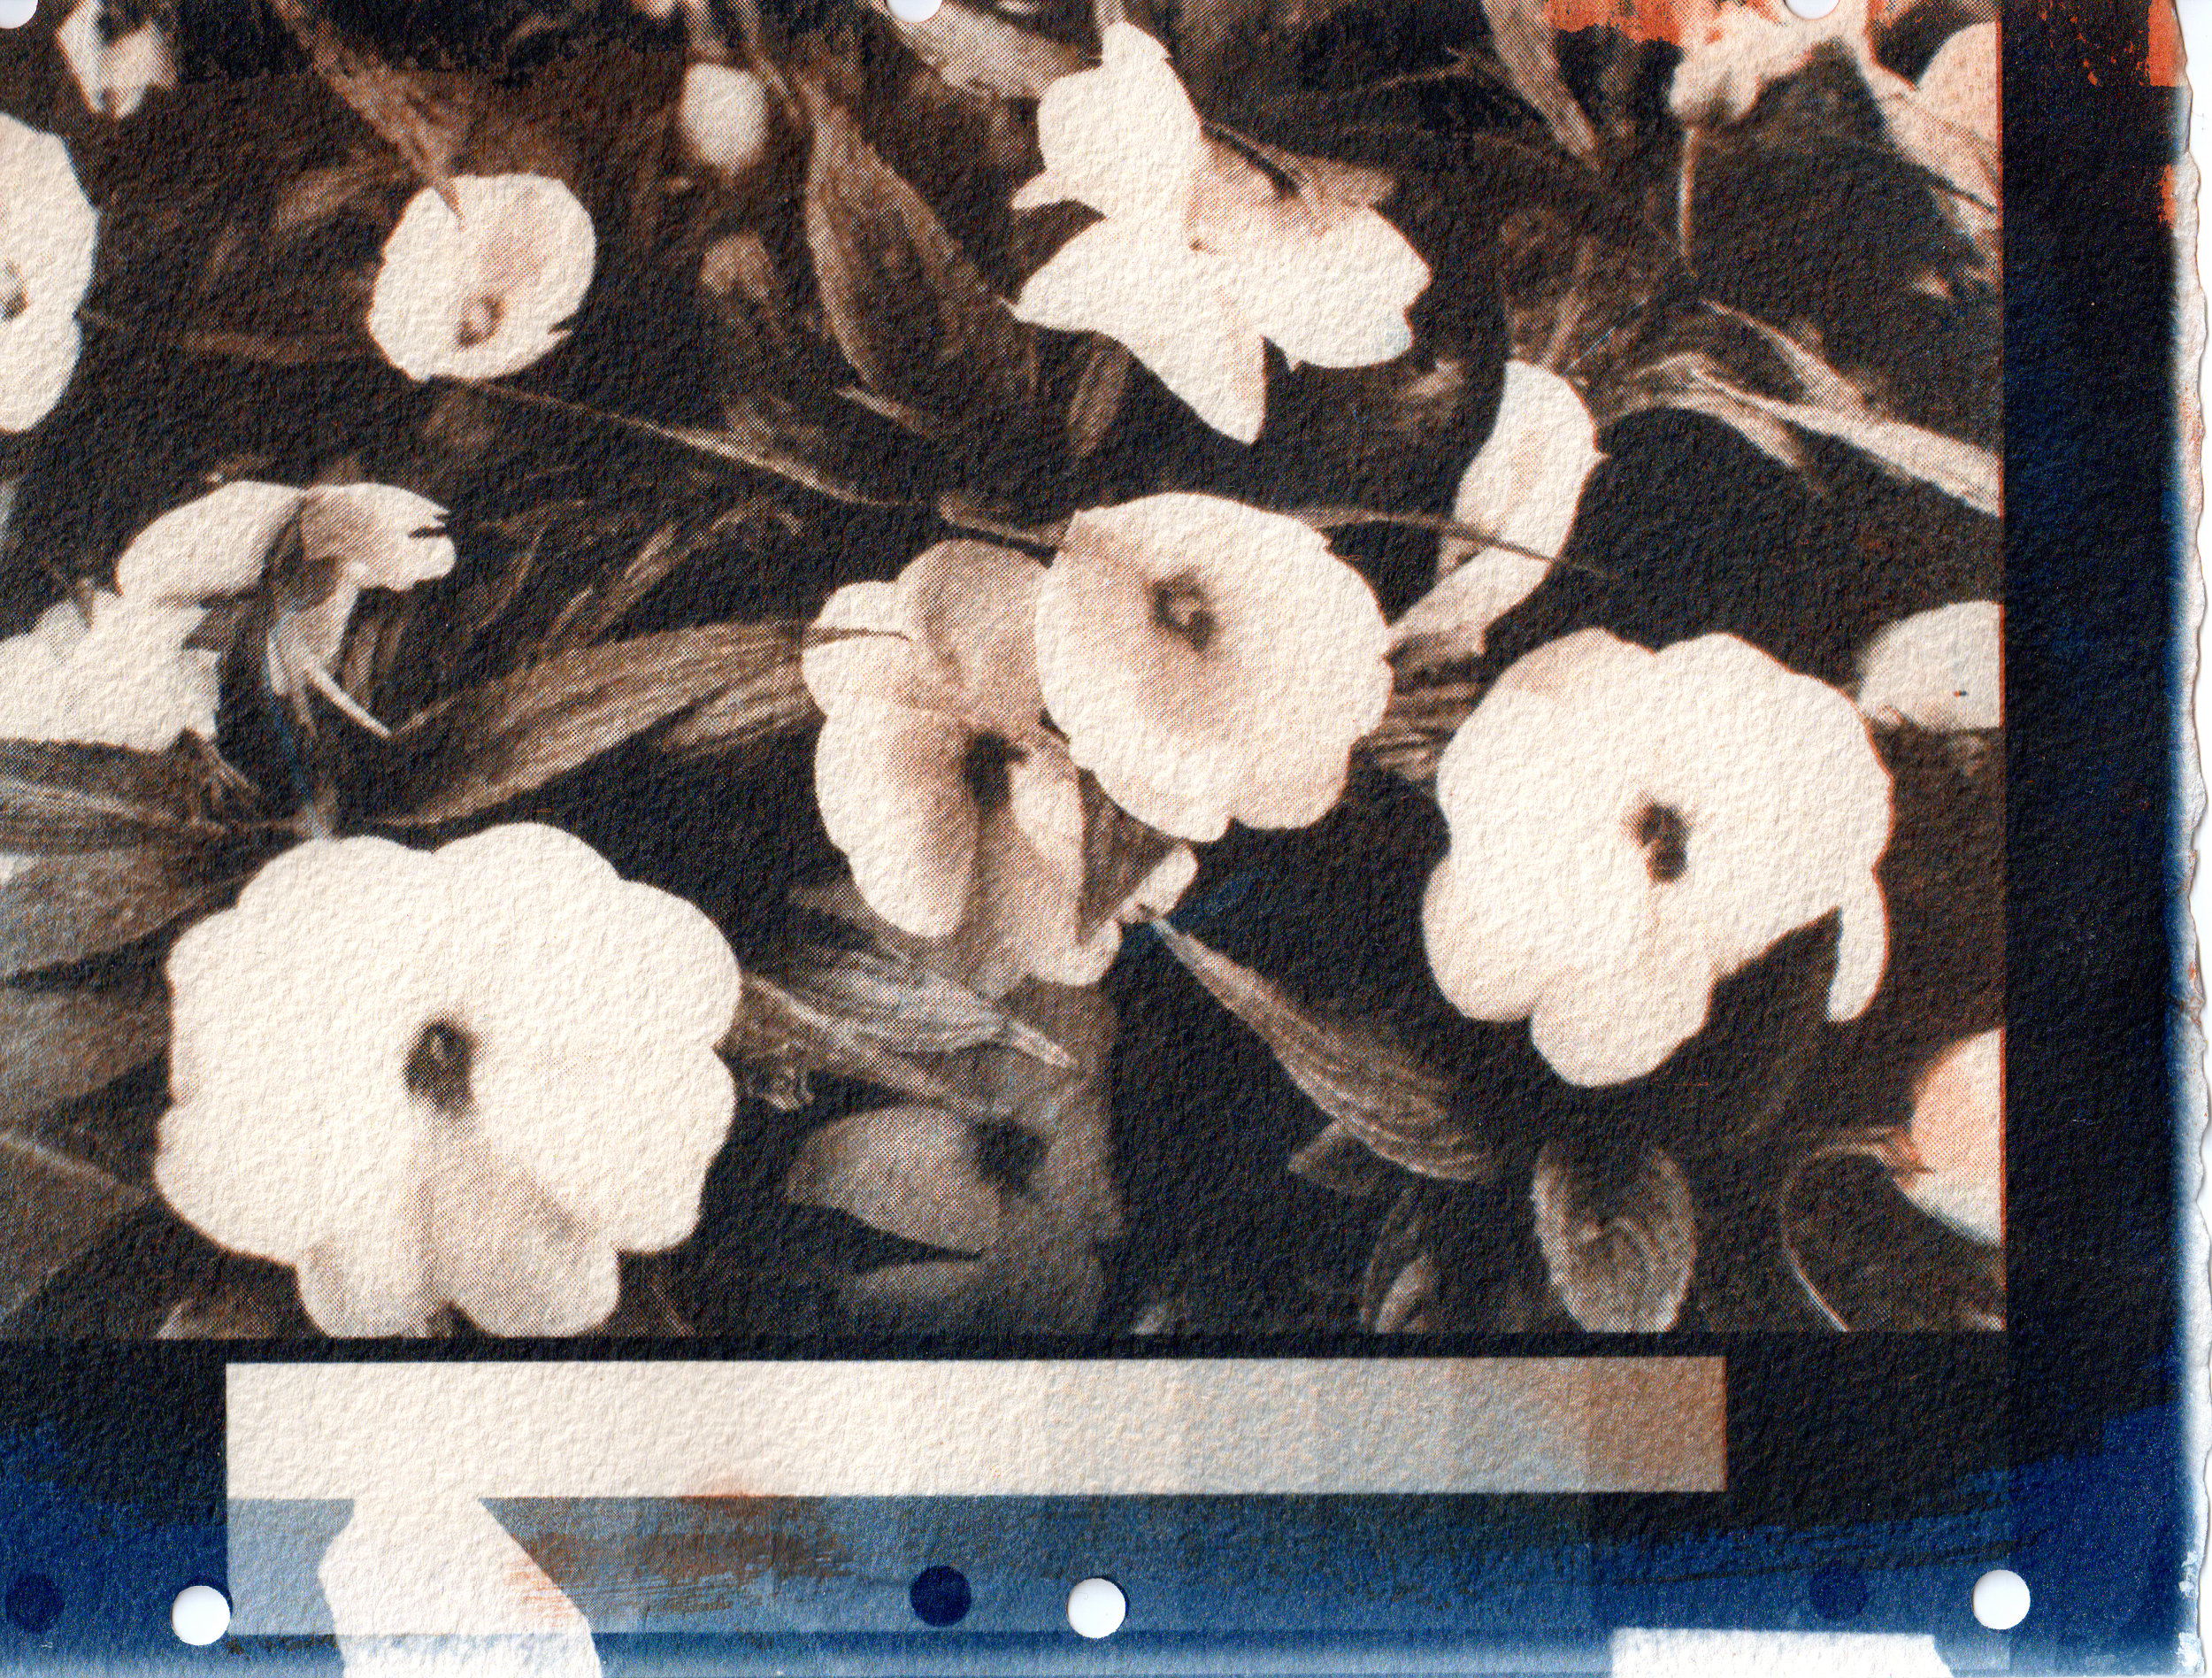 A layered Gum Bichromate and Cyanotype print (2016)